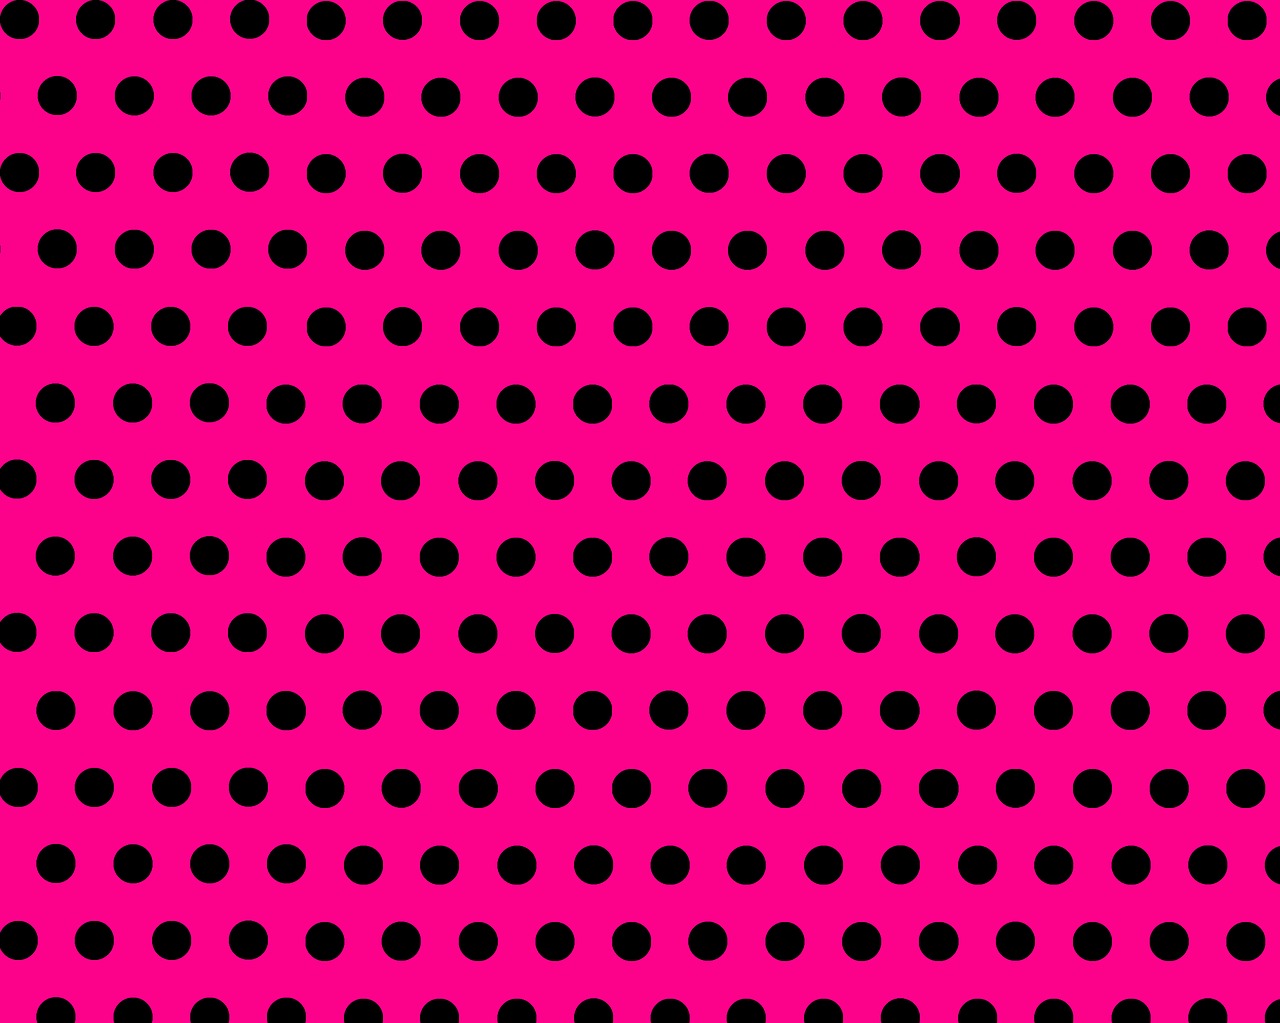 background polka dots abstract free photo